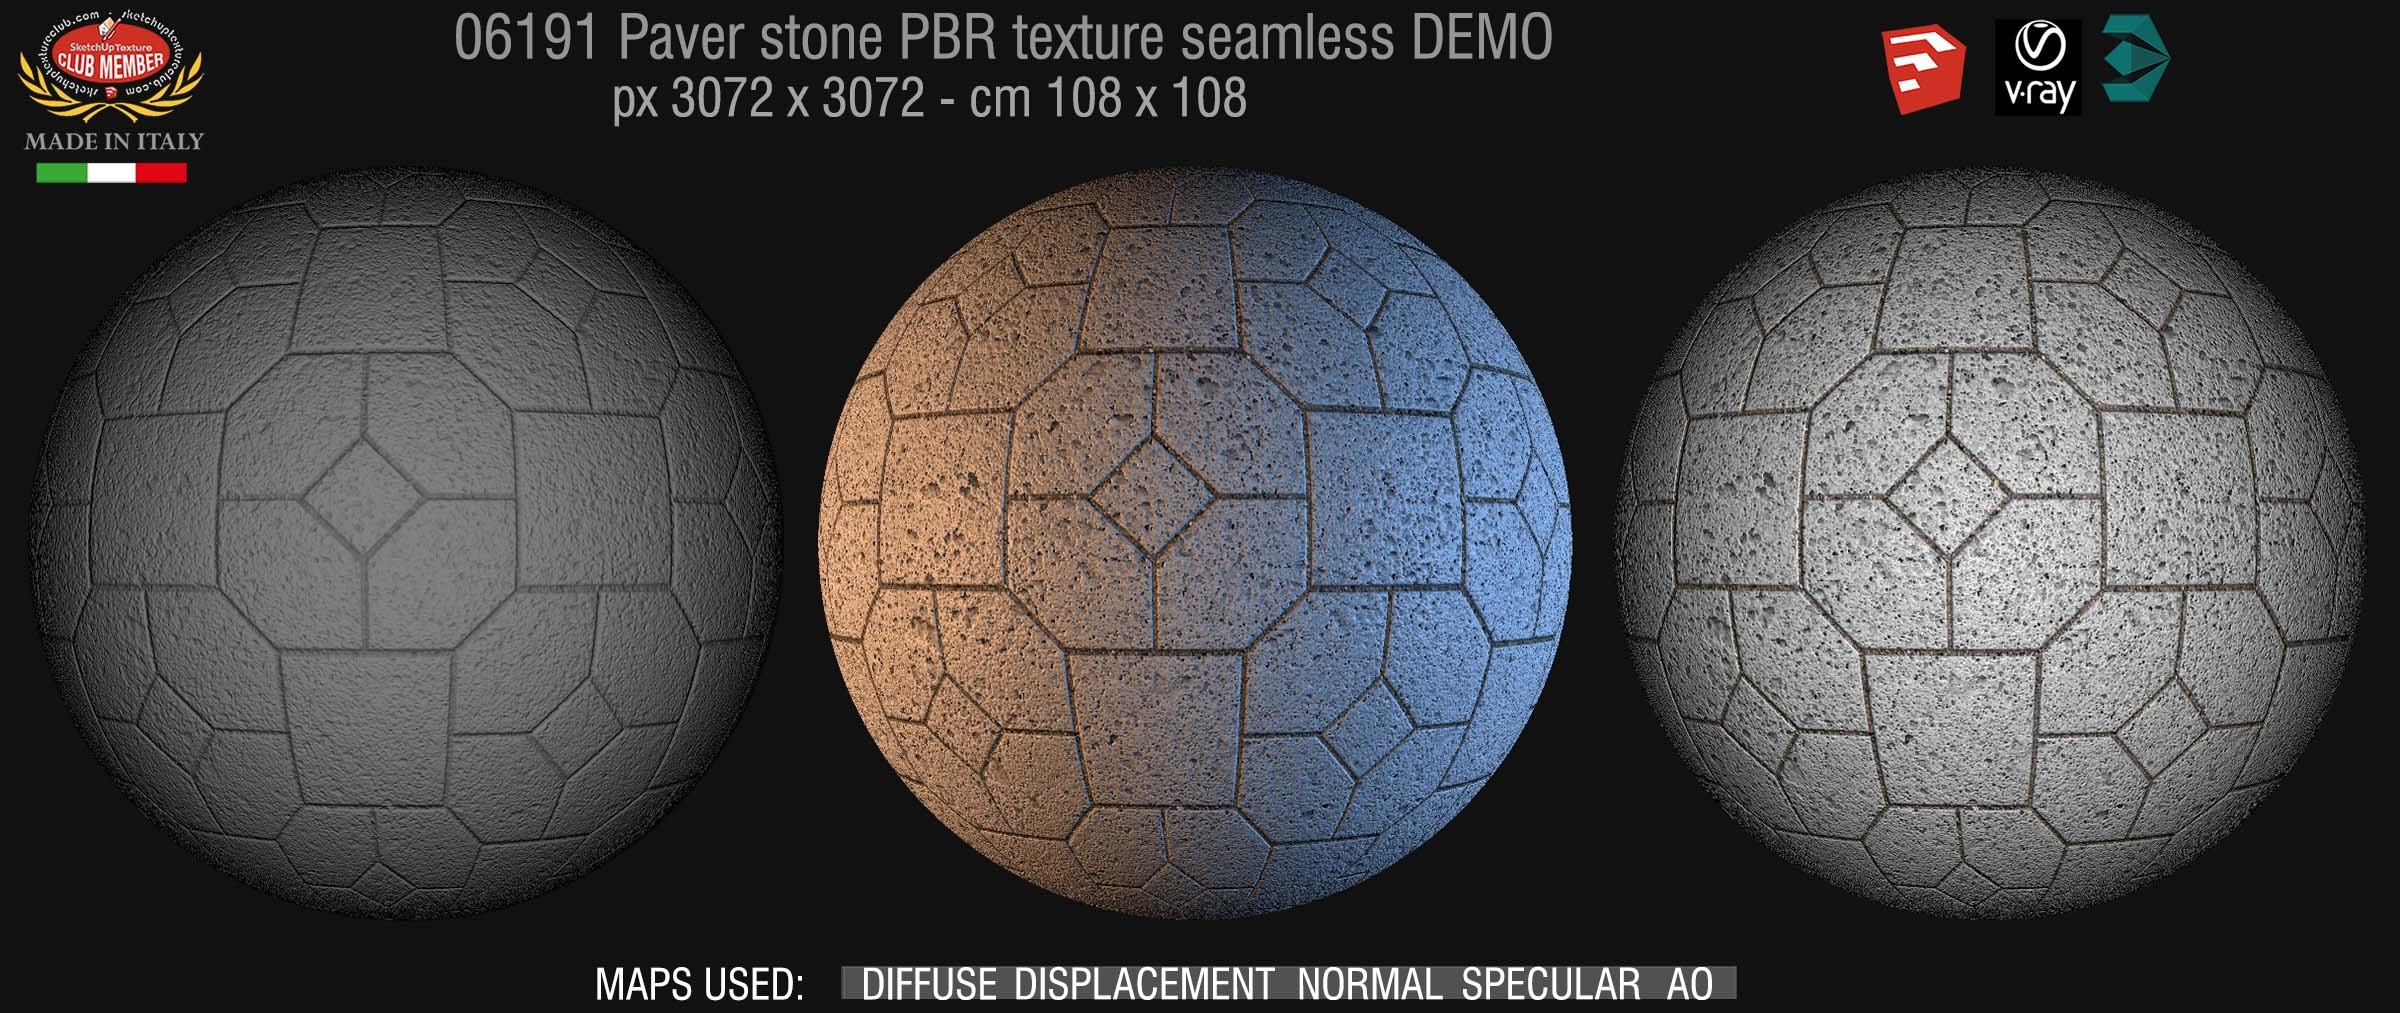 06191 Pavers stone PBR texture seamless DEMO